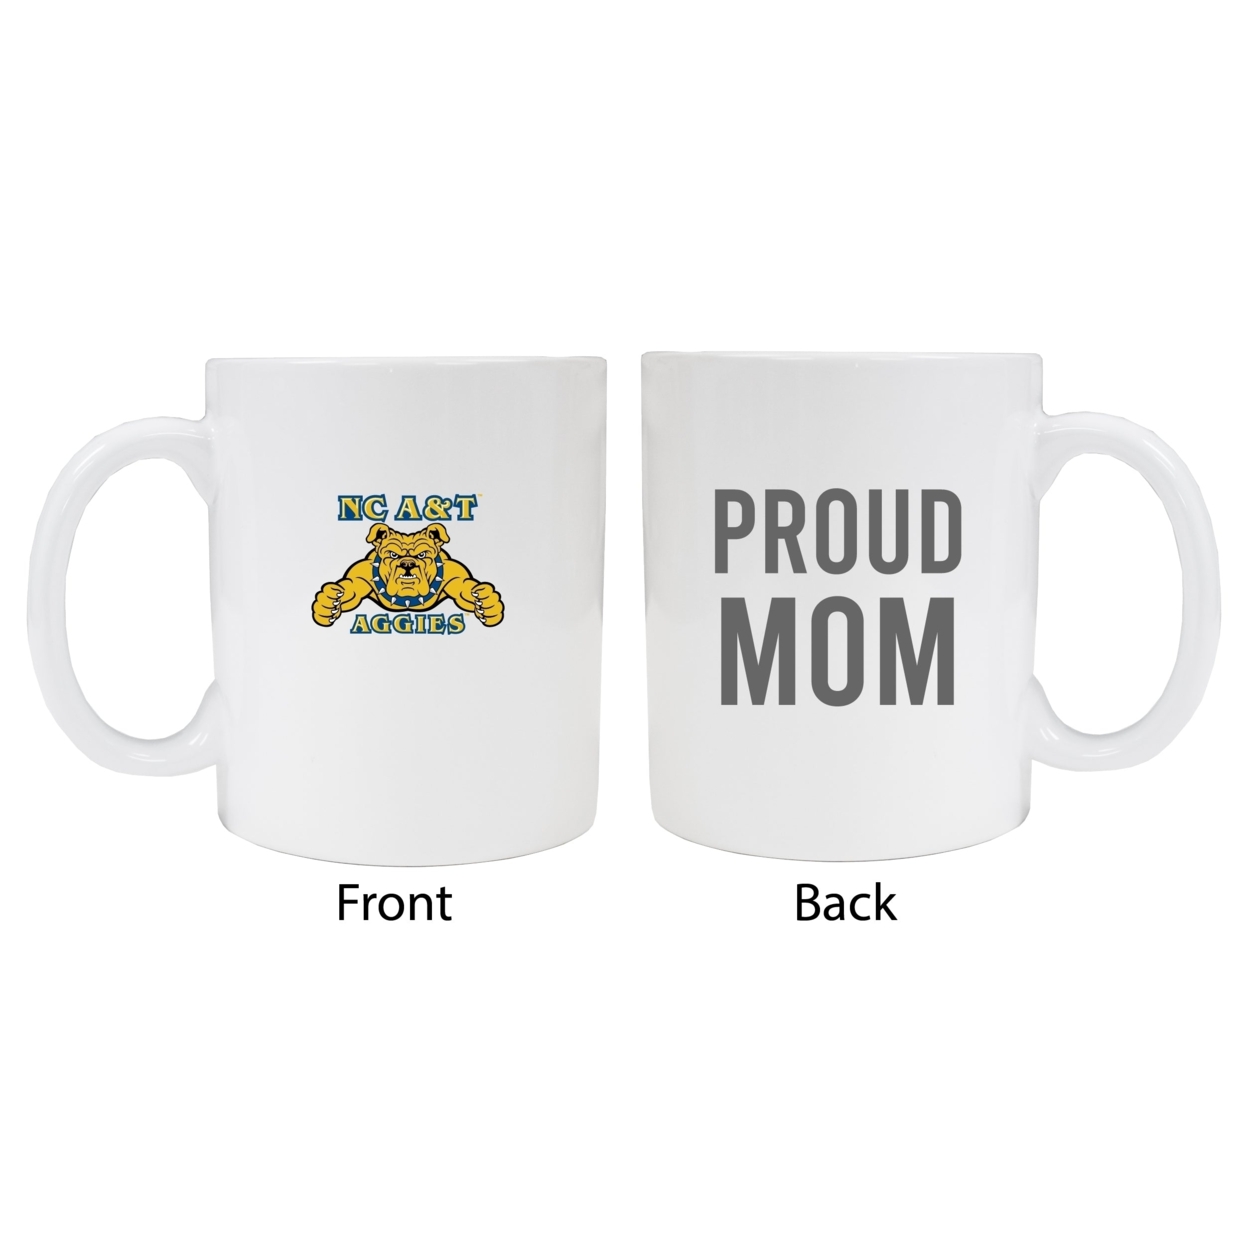 North Carolina A&T State Aggies Proud Mom Ceramic Coffee Mug - White